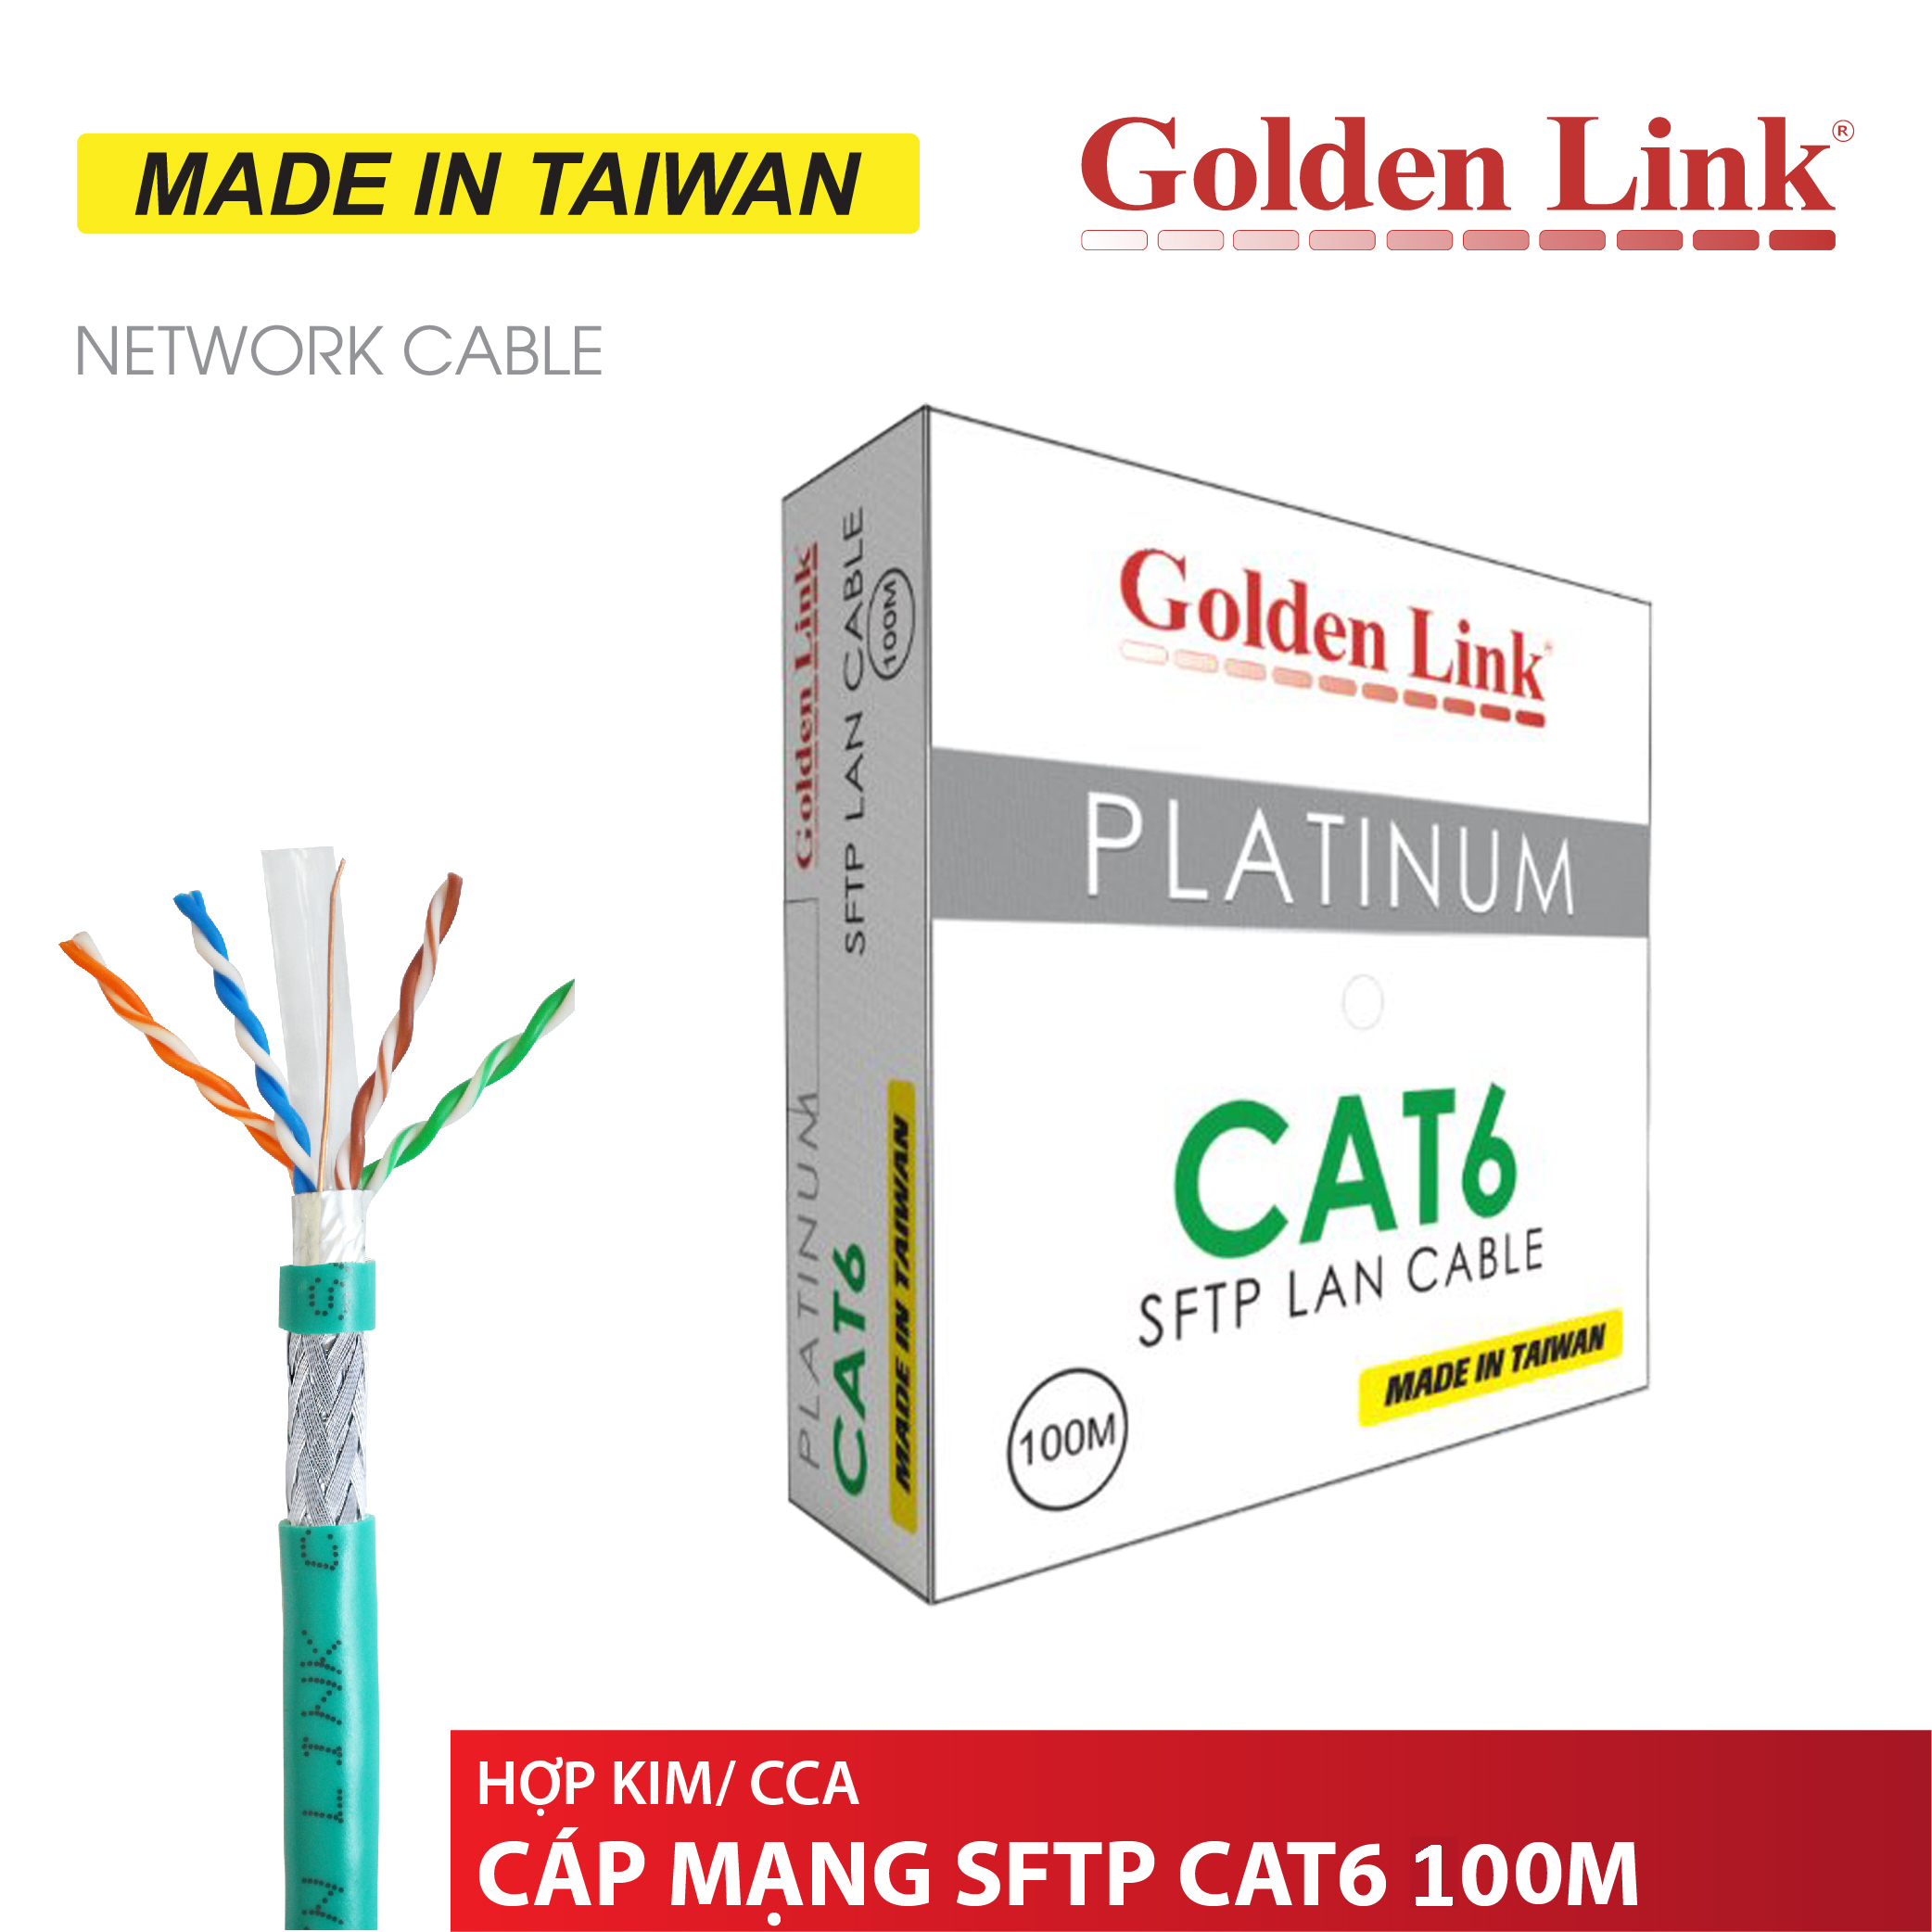 CÁP MẠNG Golden Link PLATINUM SFTP CAT6 MADE IN TAIWAN - 100M